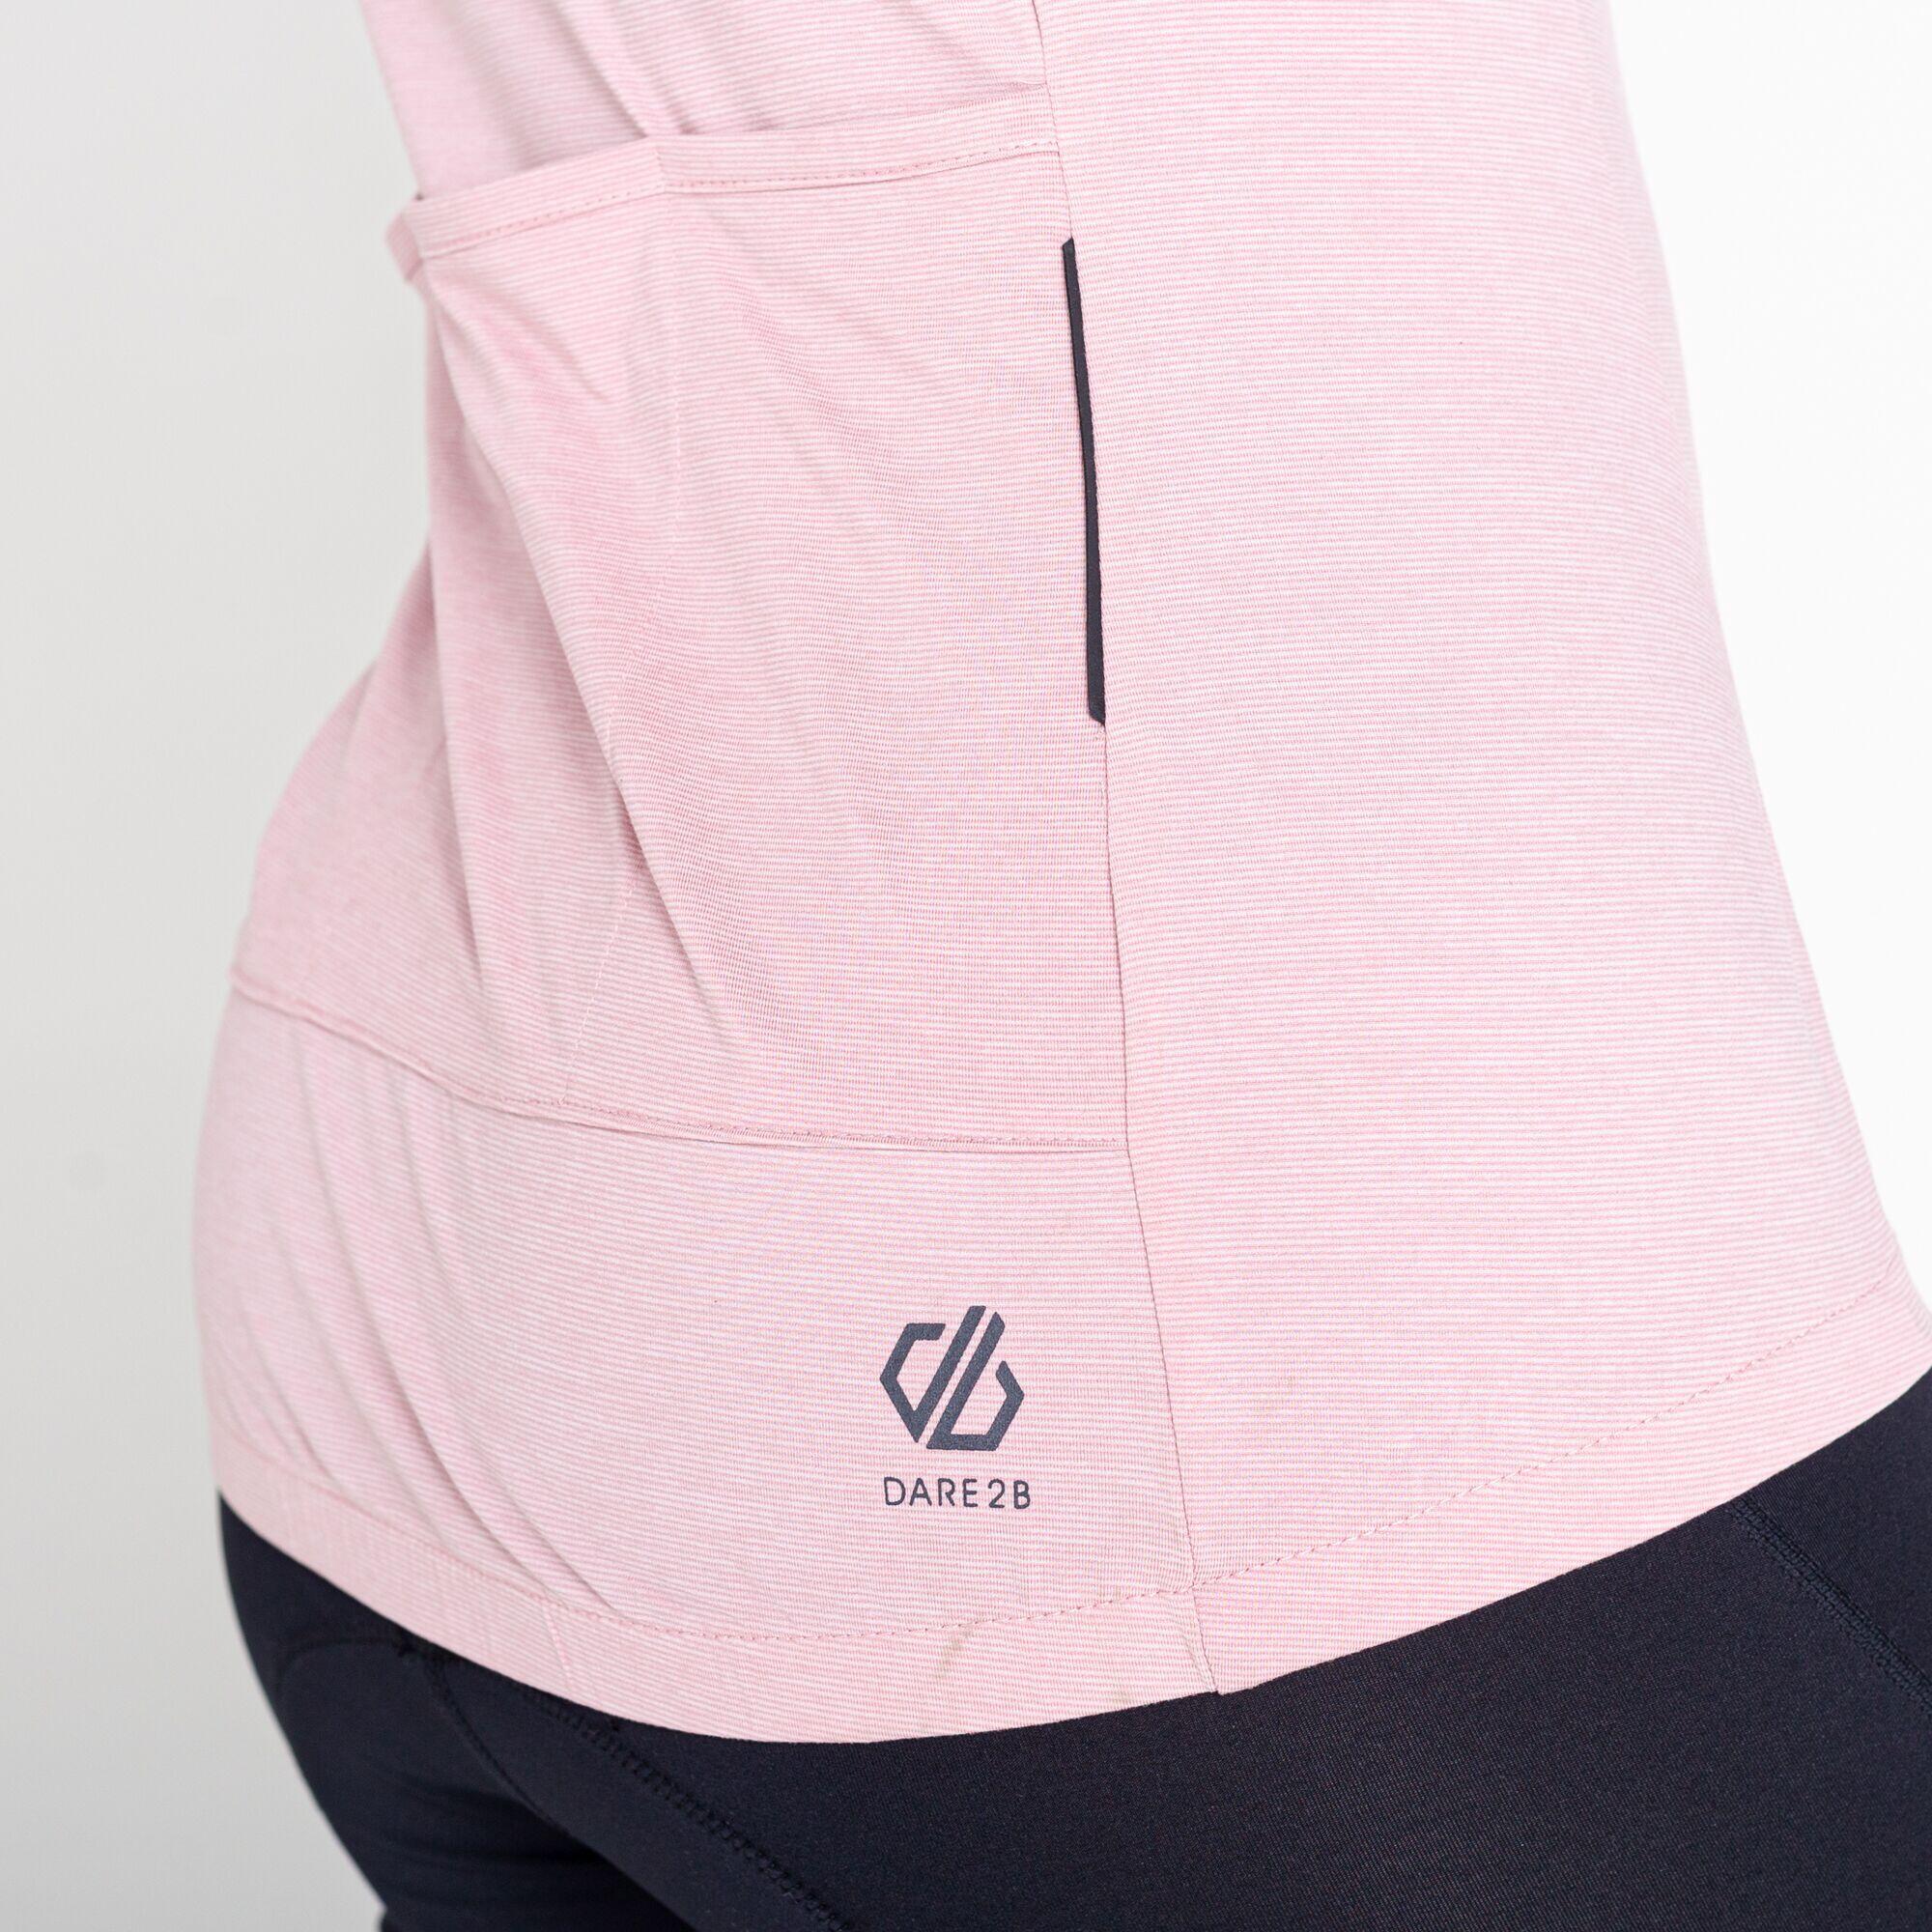 Pedal Through It Women's Fitness Short Sleeve 1/2 Zip Jersey - Powder Pink 6/6